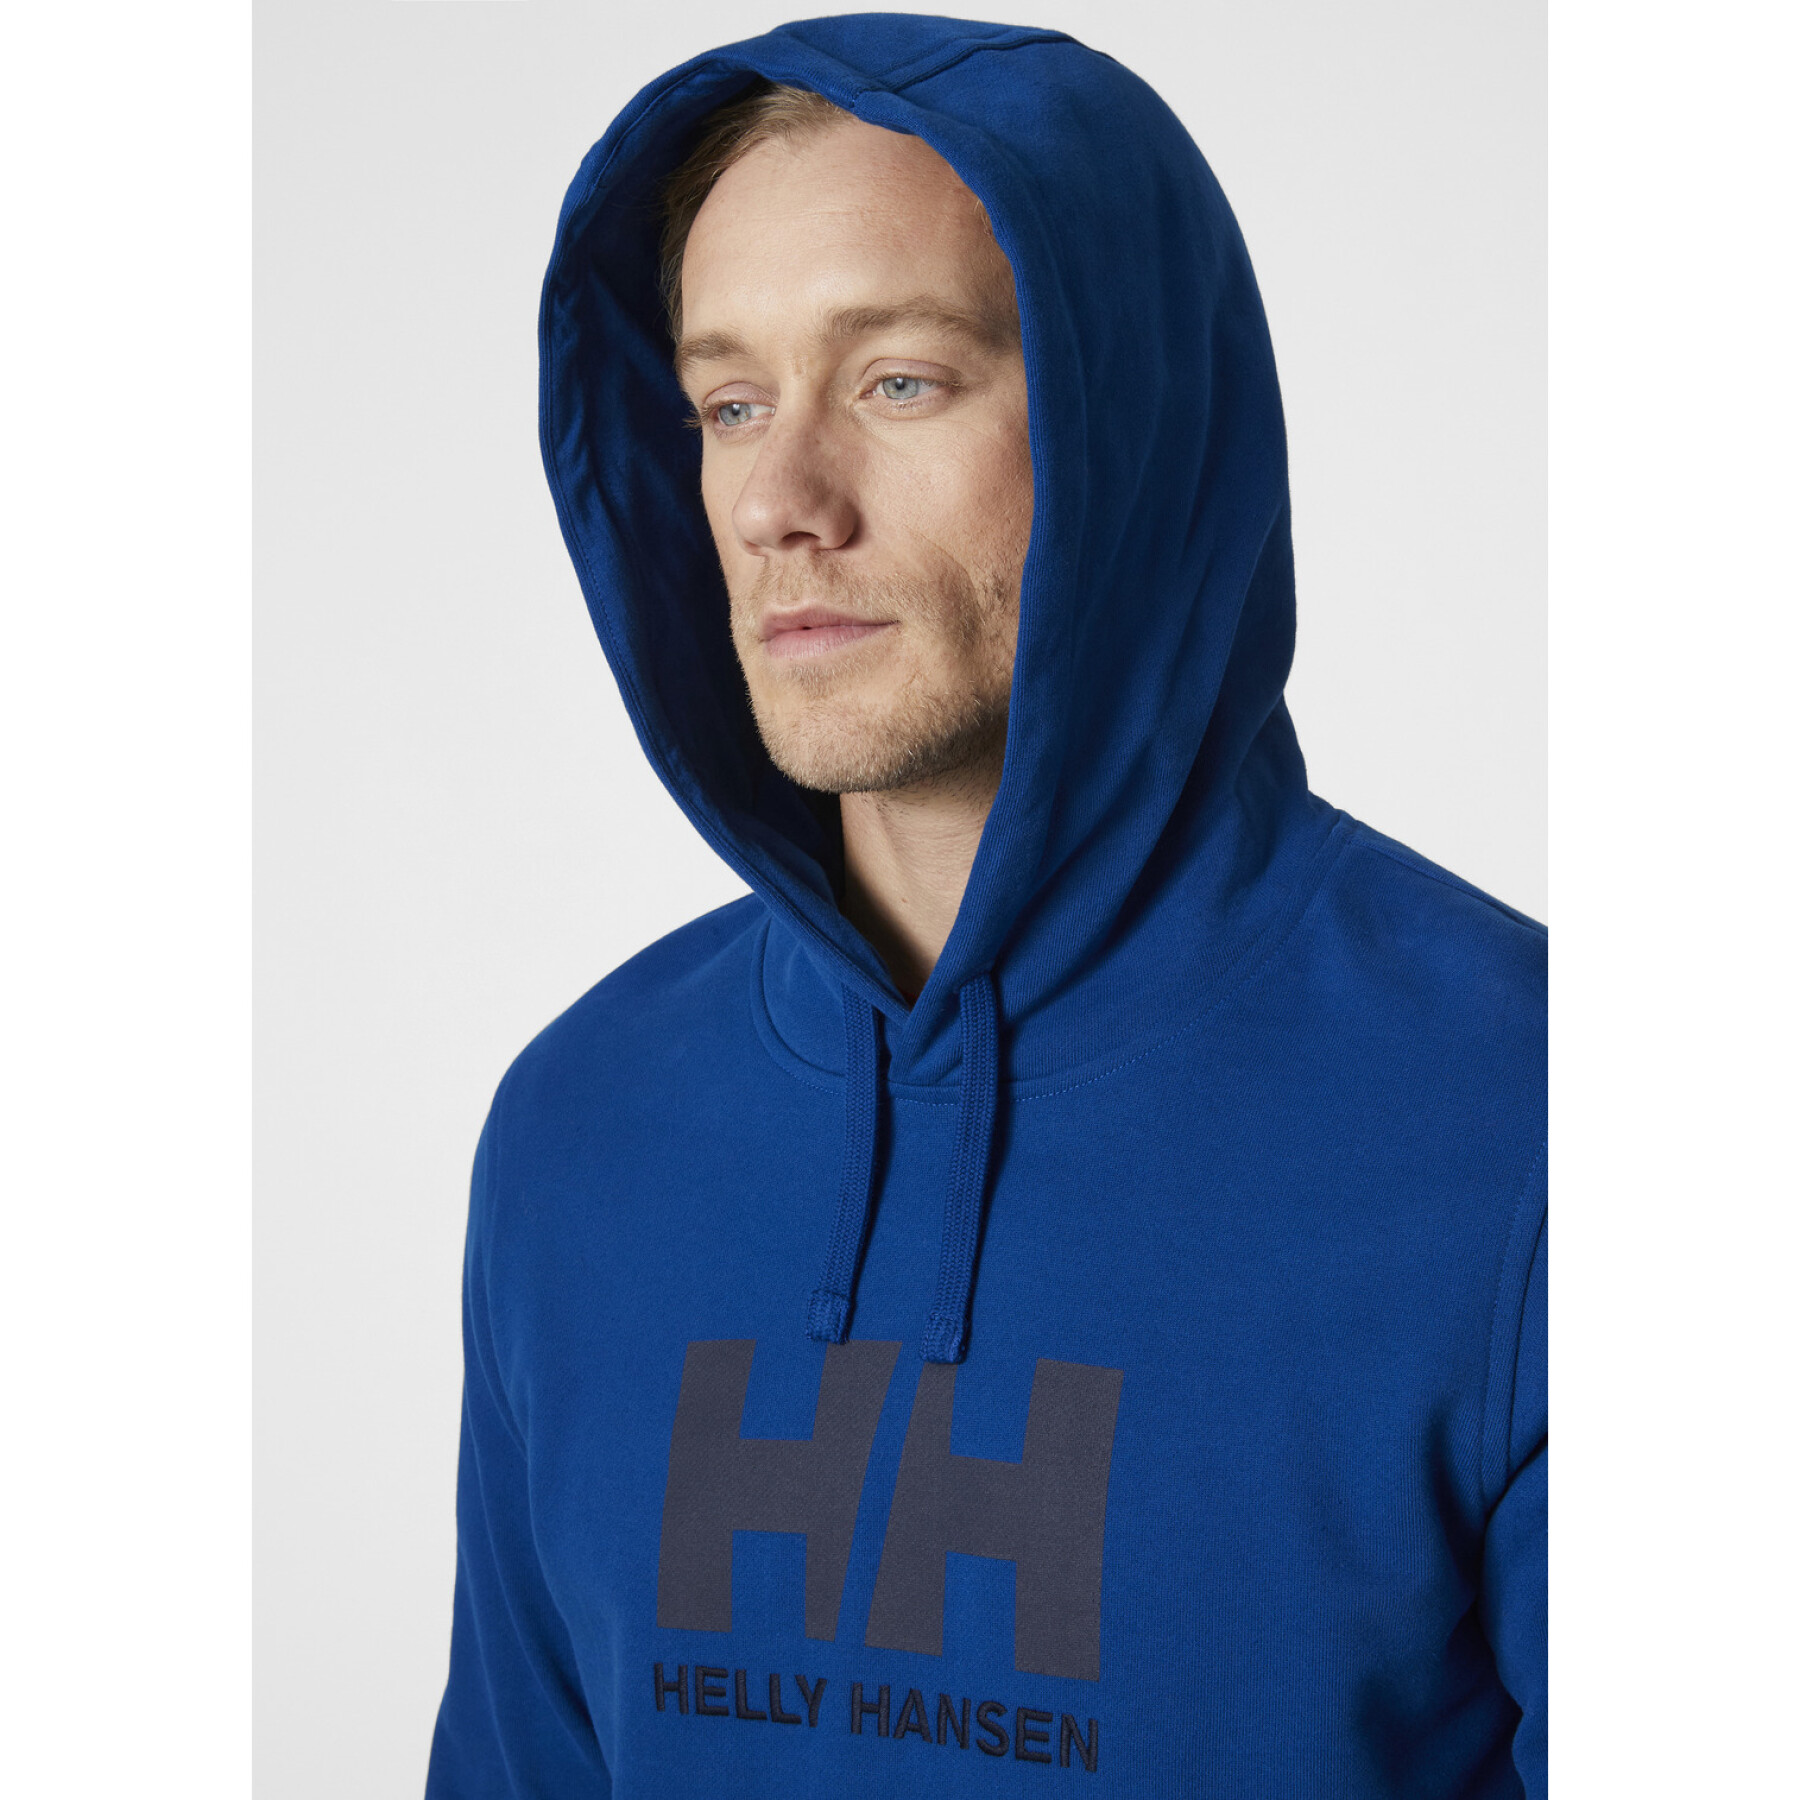 Hooded sweatshirt Helly Hansen Logo